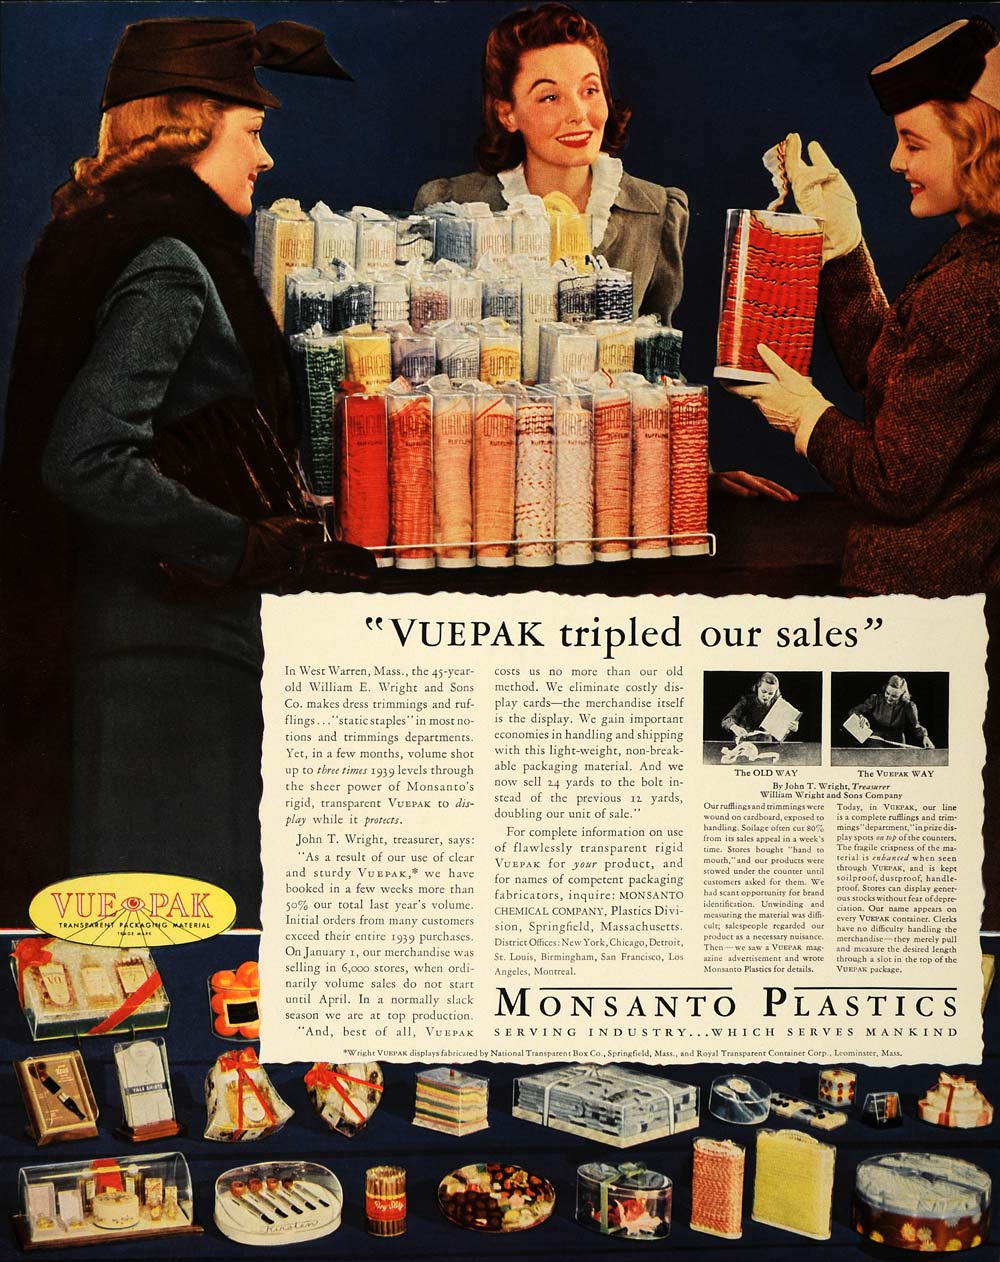 1940 Ad Monsanto Plastics Vuepak Sewing Trim Package - ORIGINAL ADVERTISING FT6